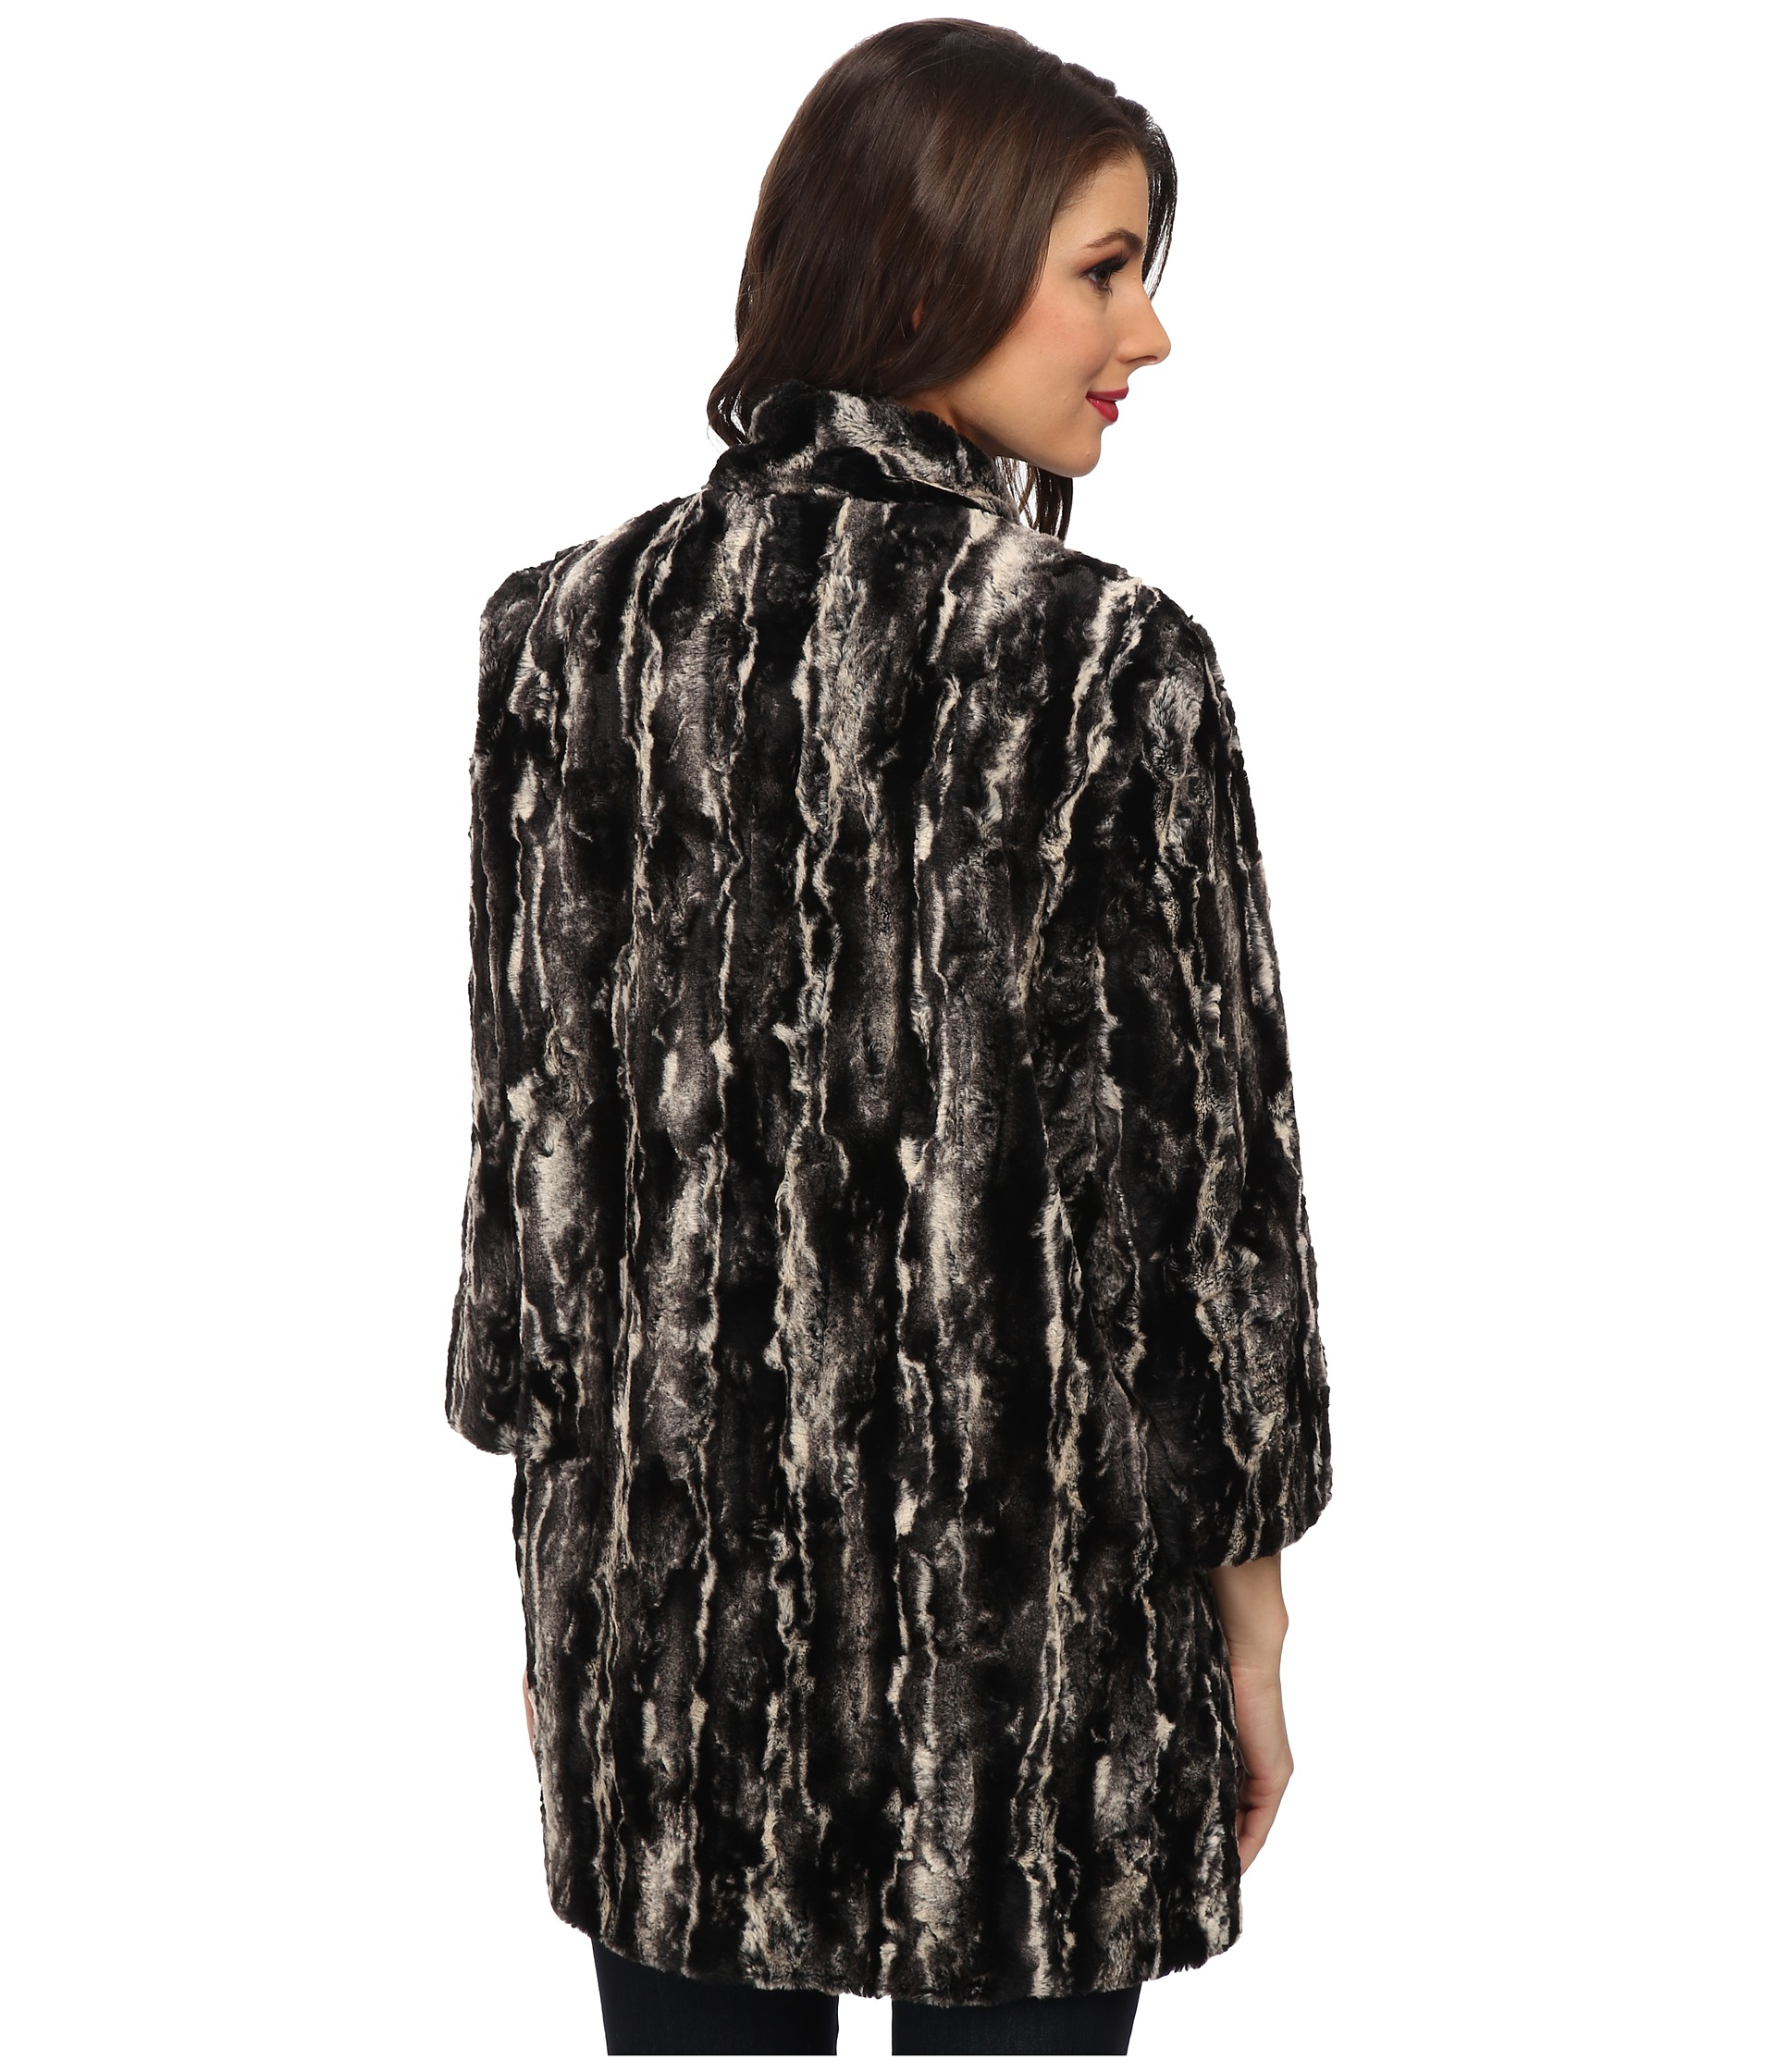 Lyst - Karen Kane Marble Faux Fur Jacket in Black